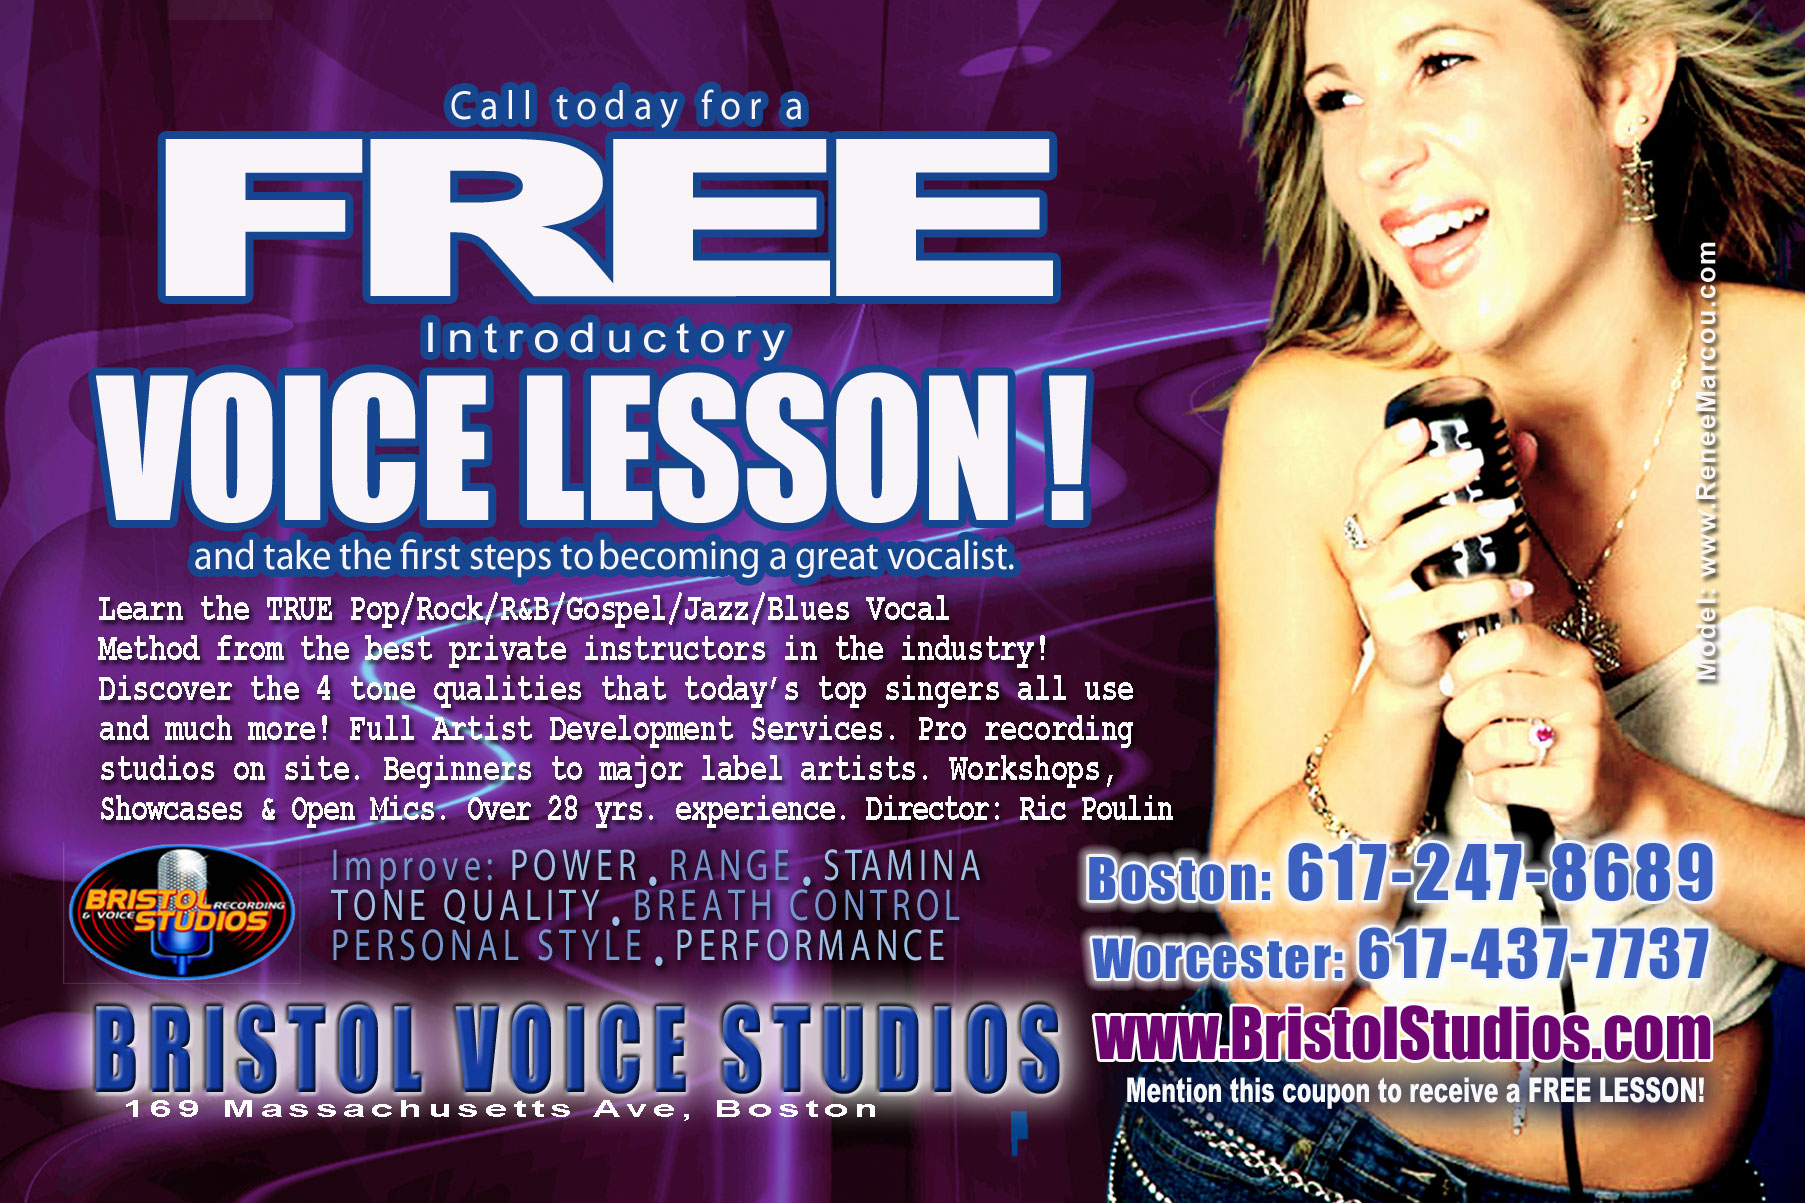 Free Voice
                  Lesson www.bristolstudios.com